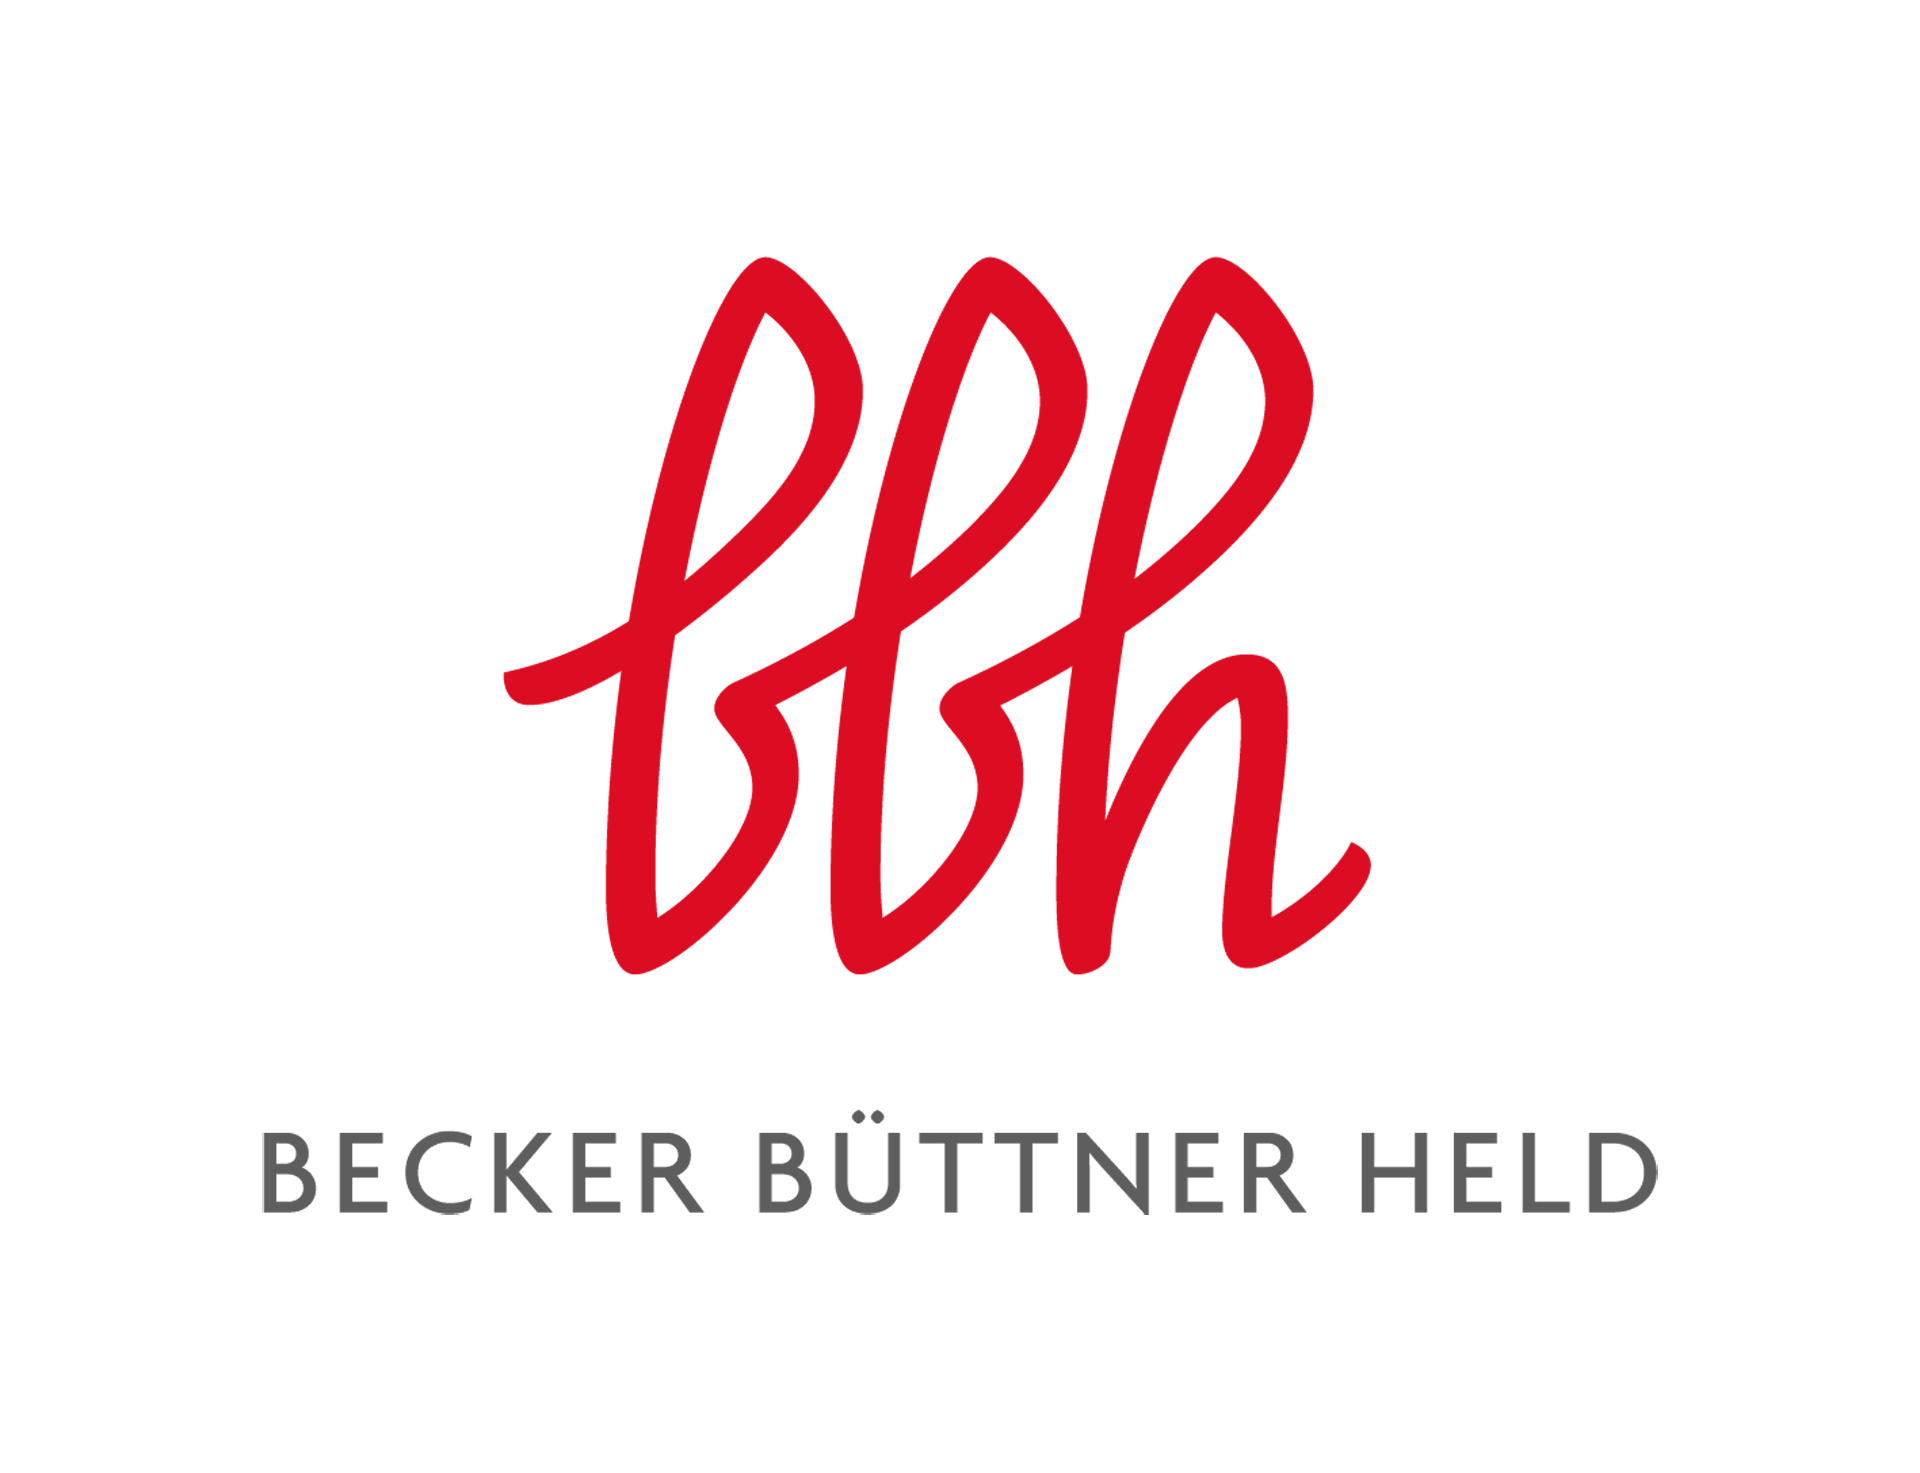 Logo BBH